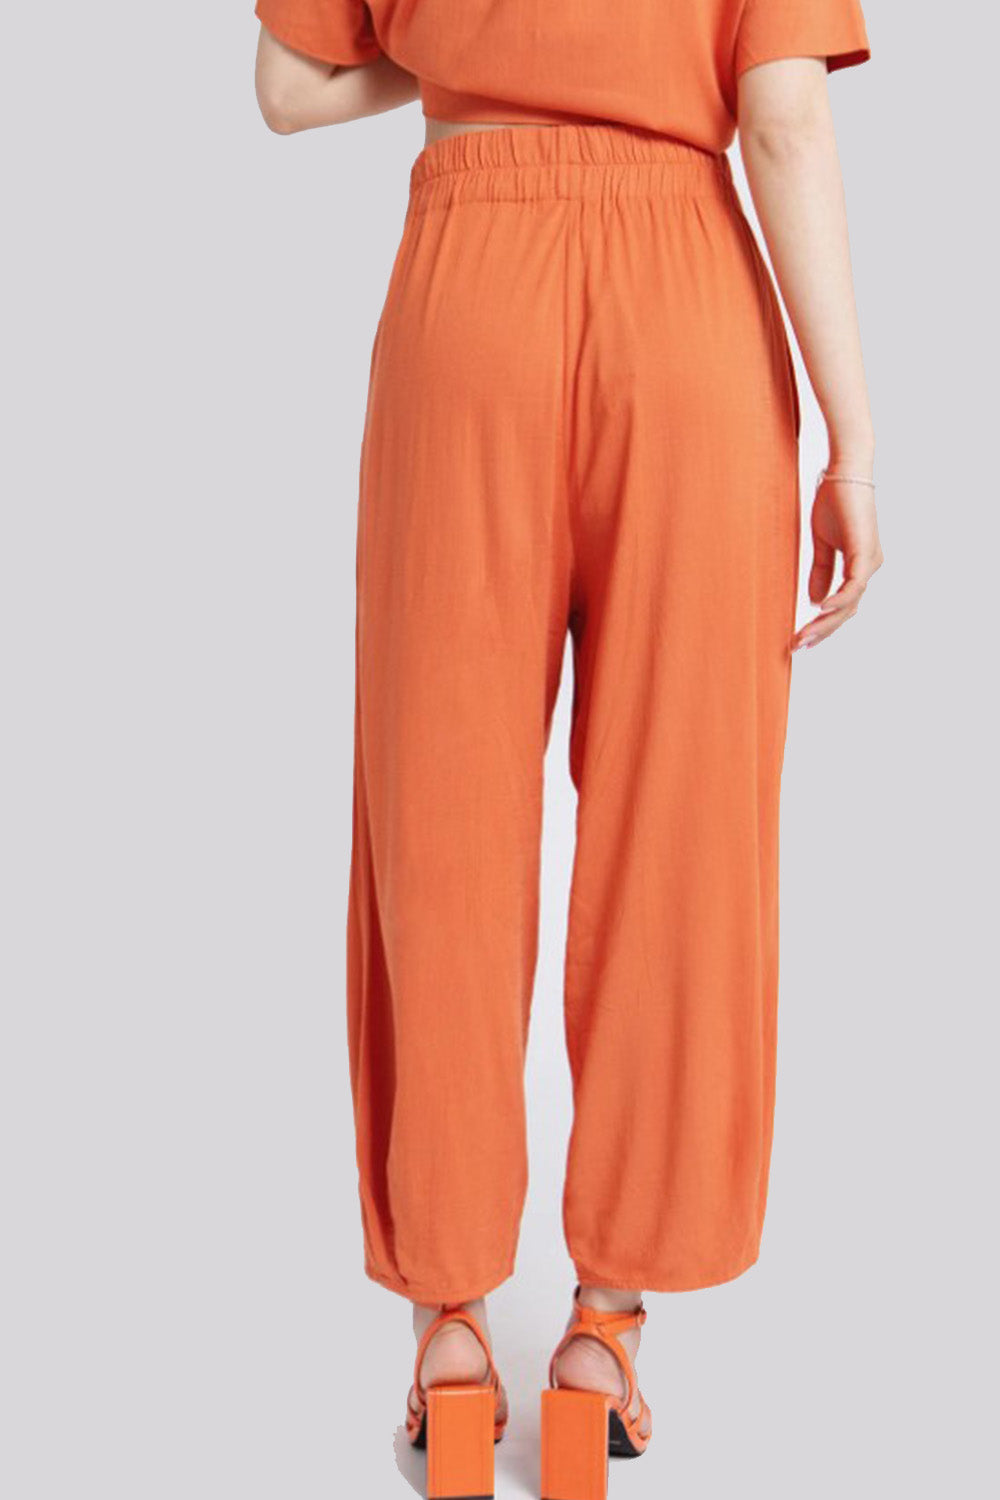 Glimmering Orange Trouser